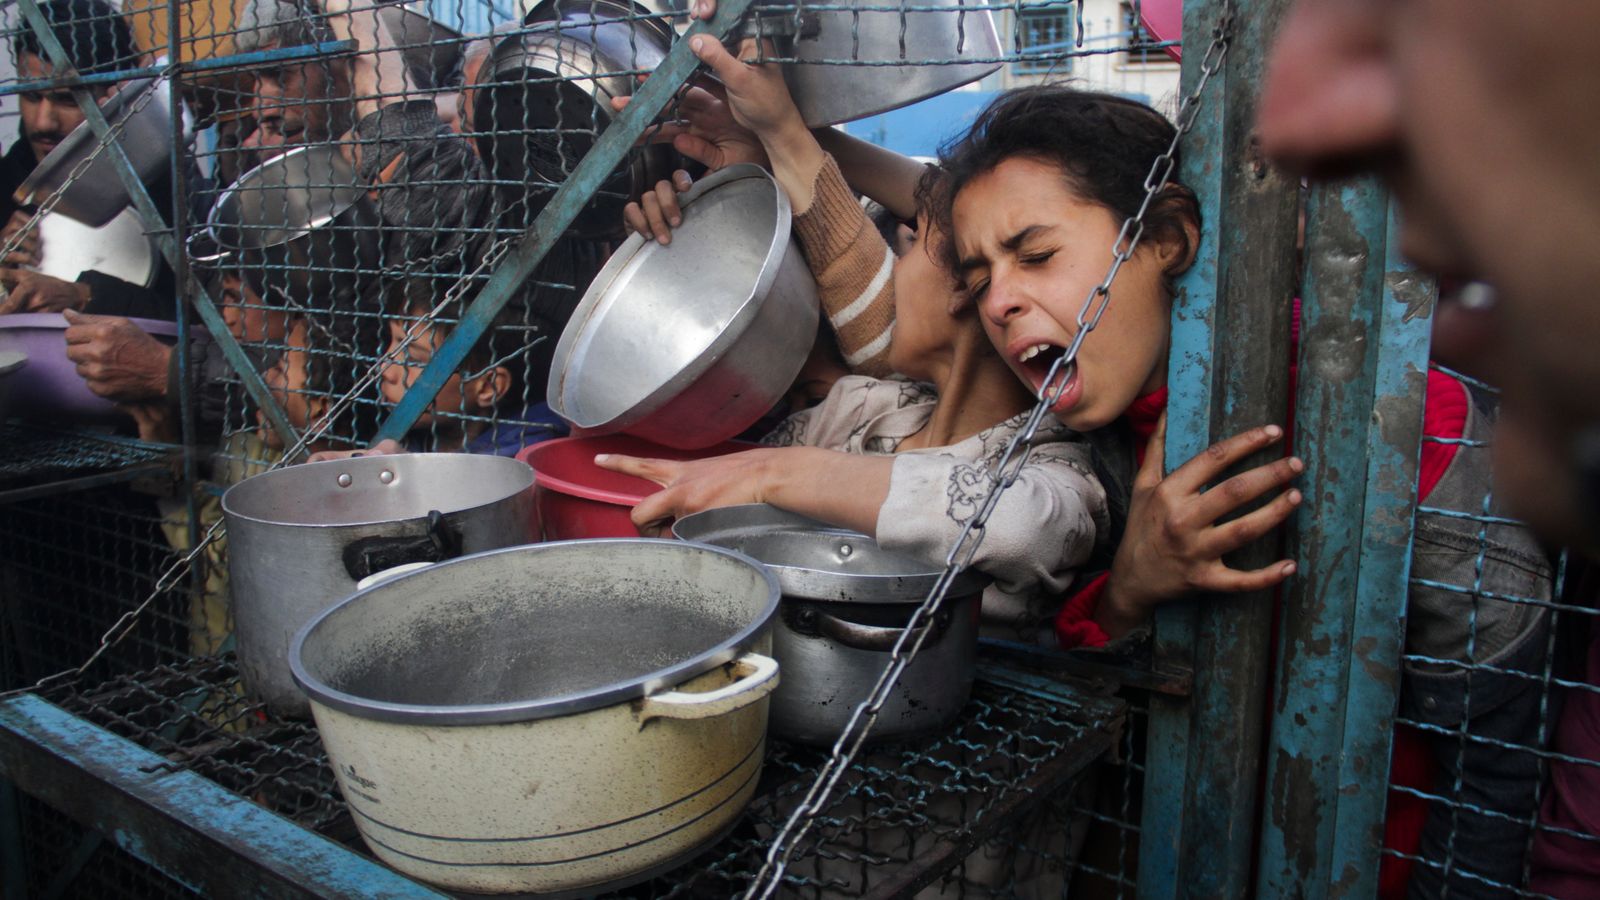 Israeli war cabinet member Ron Dermer denies there is a famine in Gaza